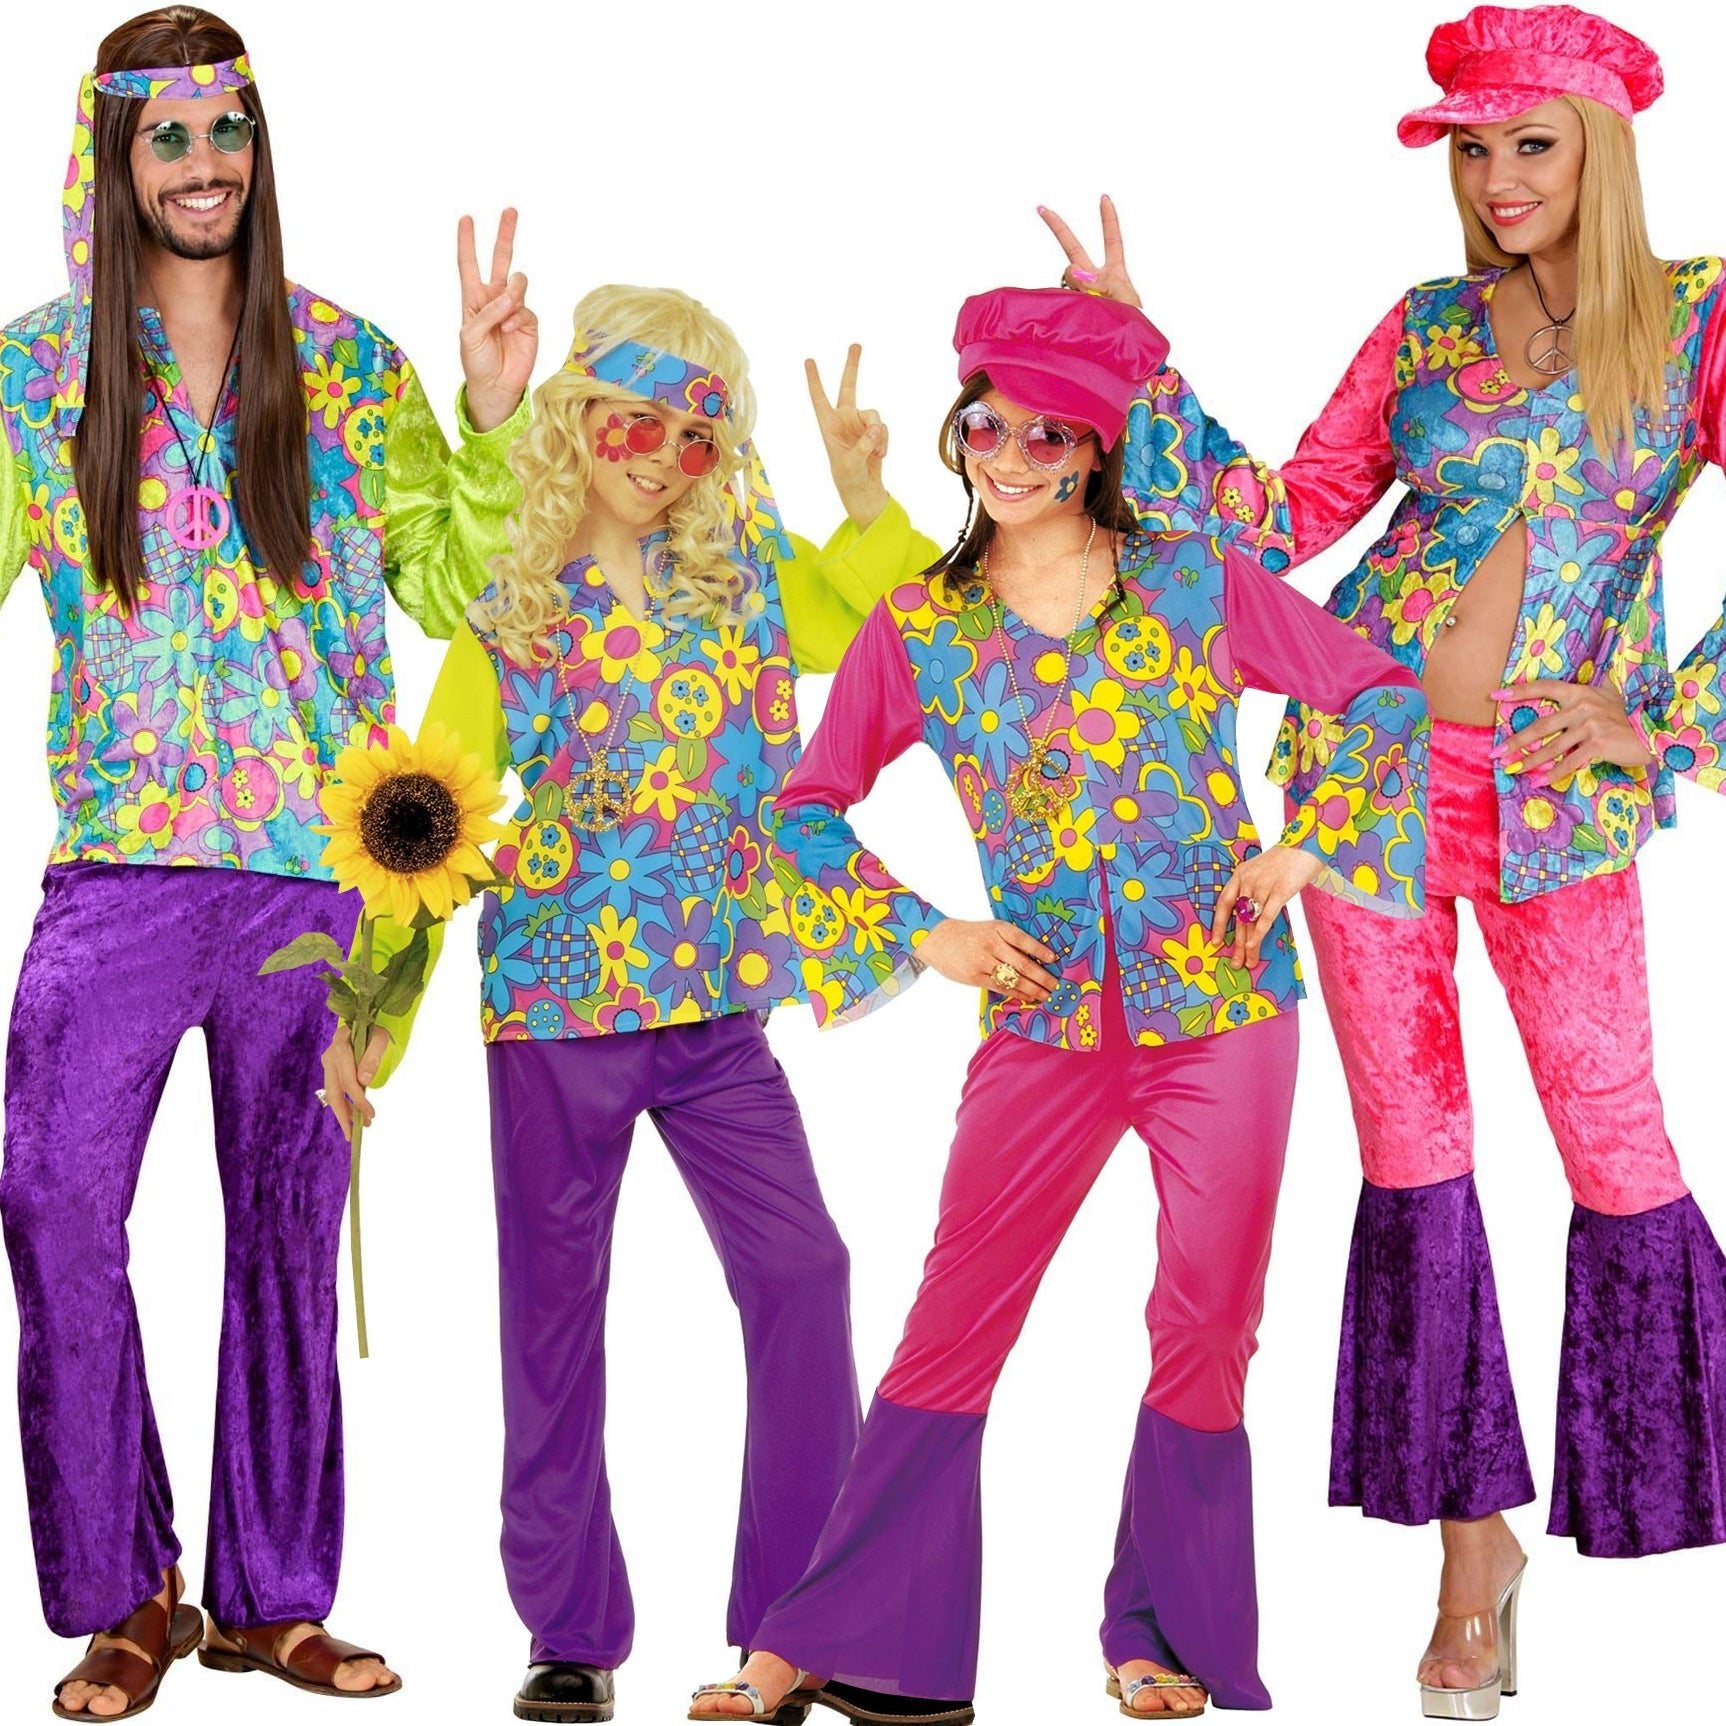 Acquista: Costumi di gruppo da Hippie